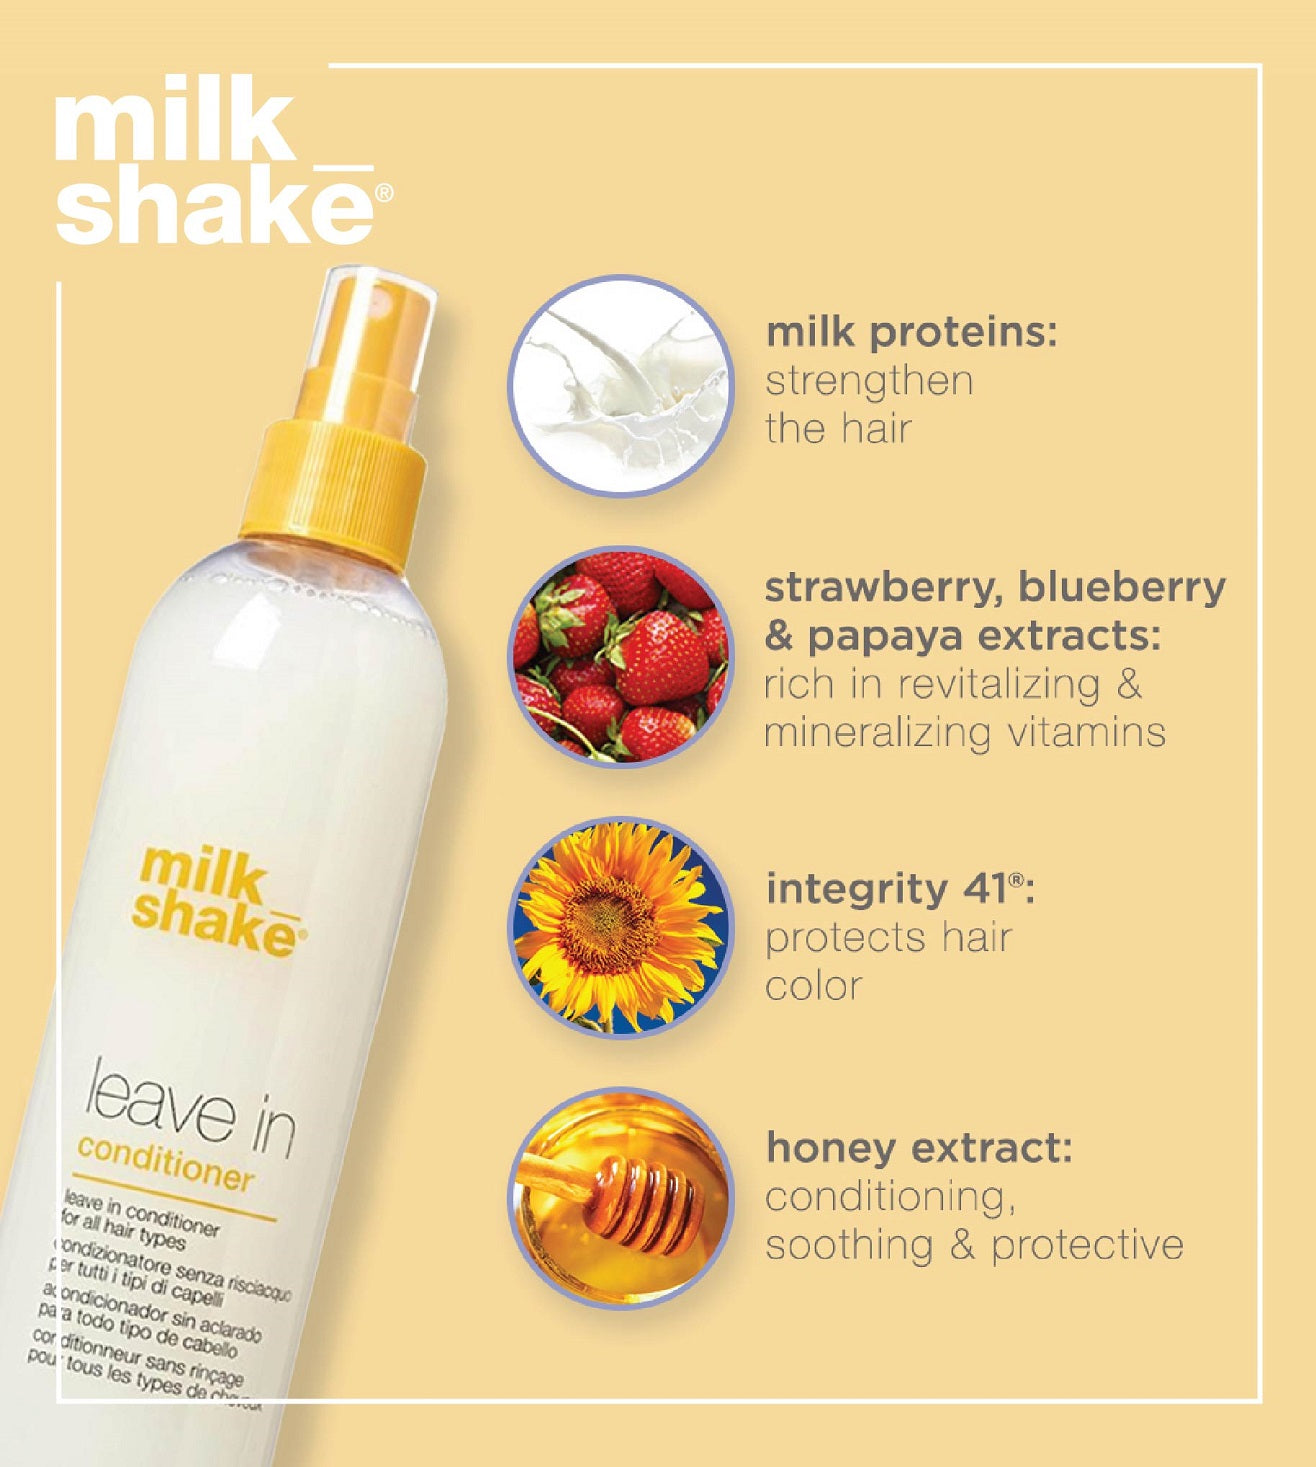 milk_shake leave in conditioner